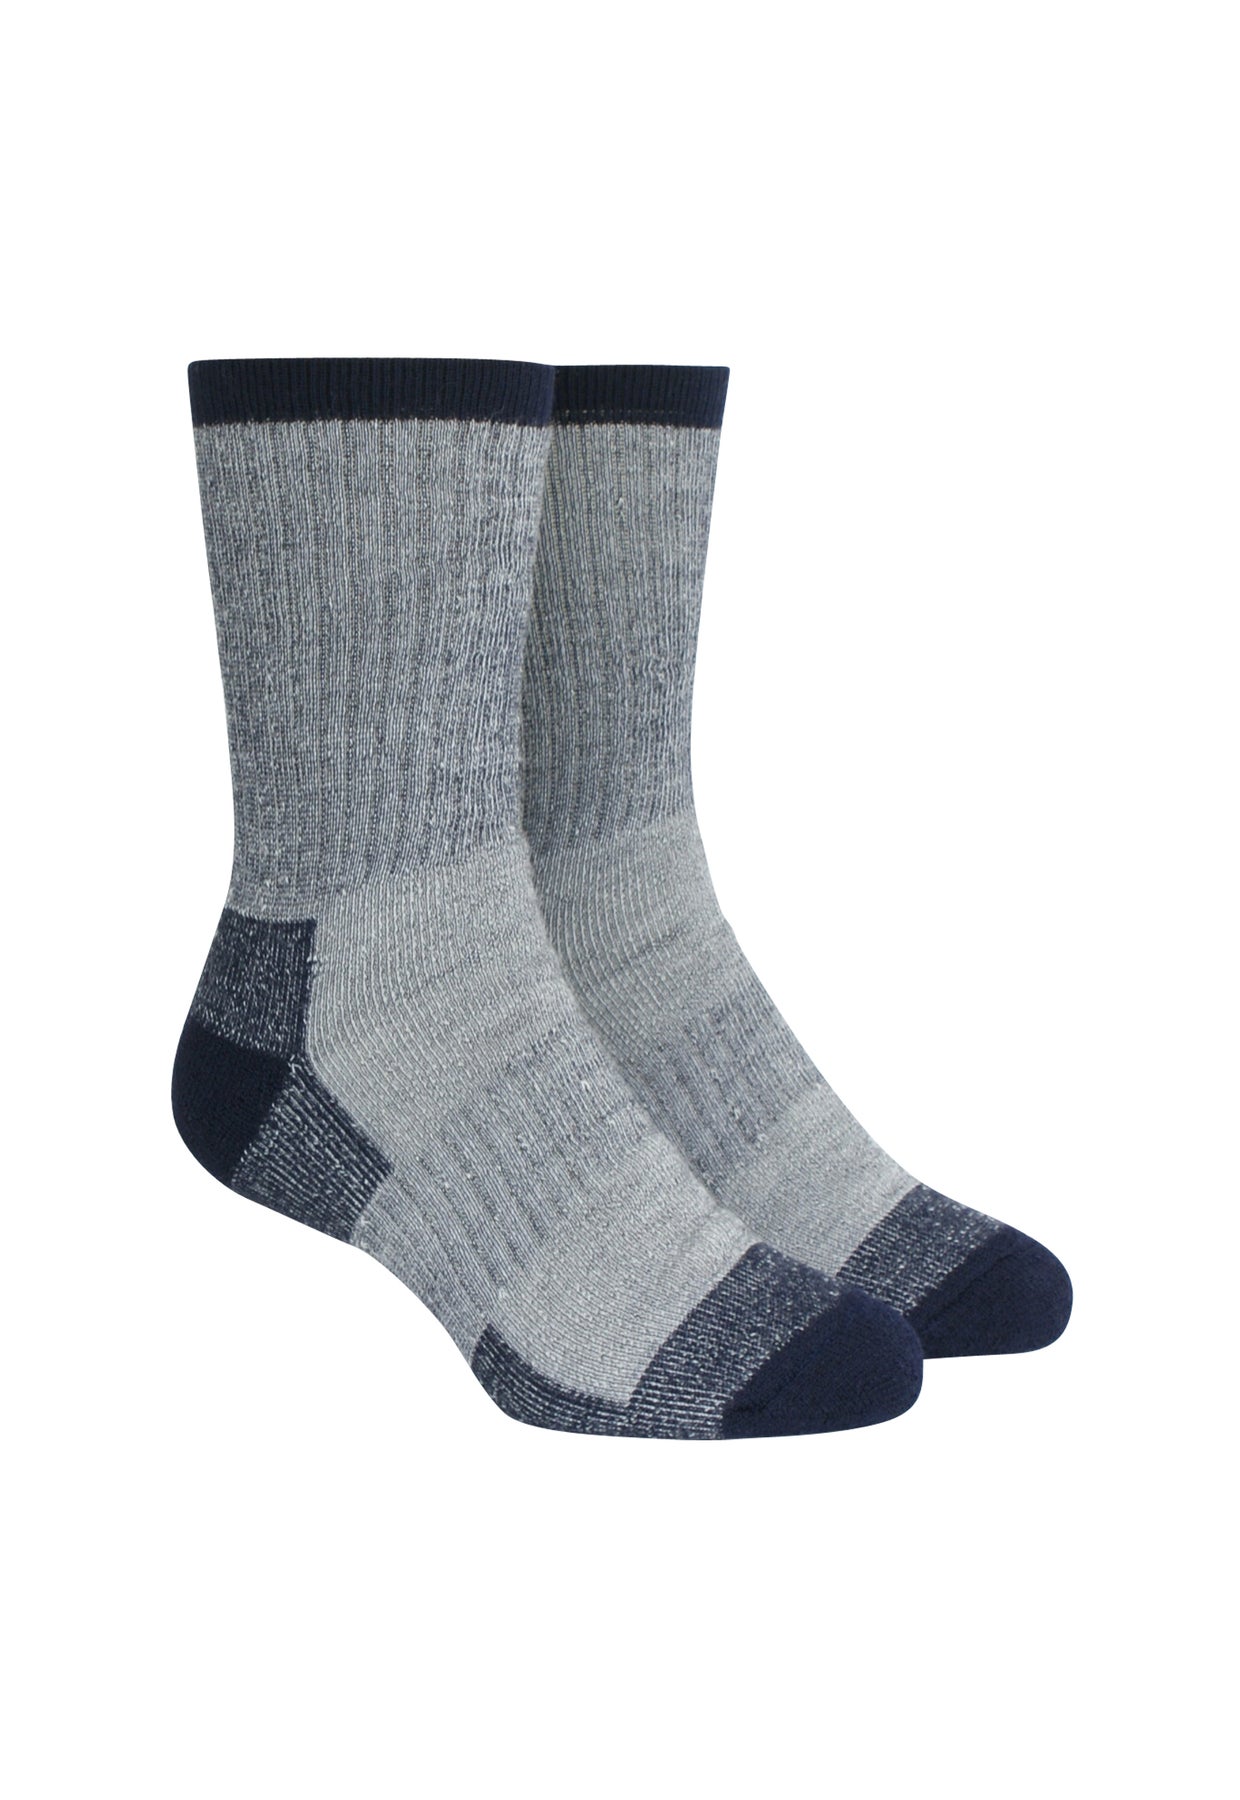 Merino Jean Socks | Indigo | Menswear | The Wool Company